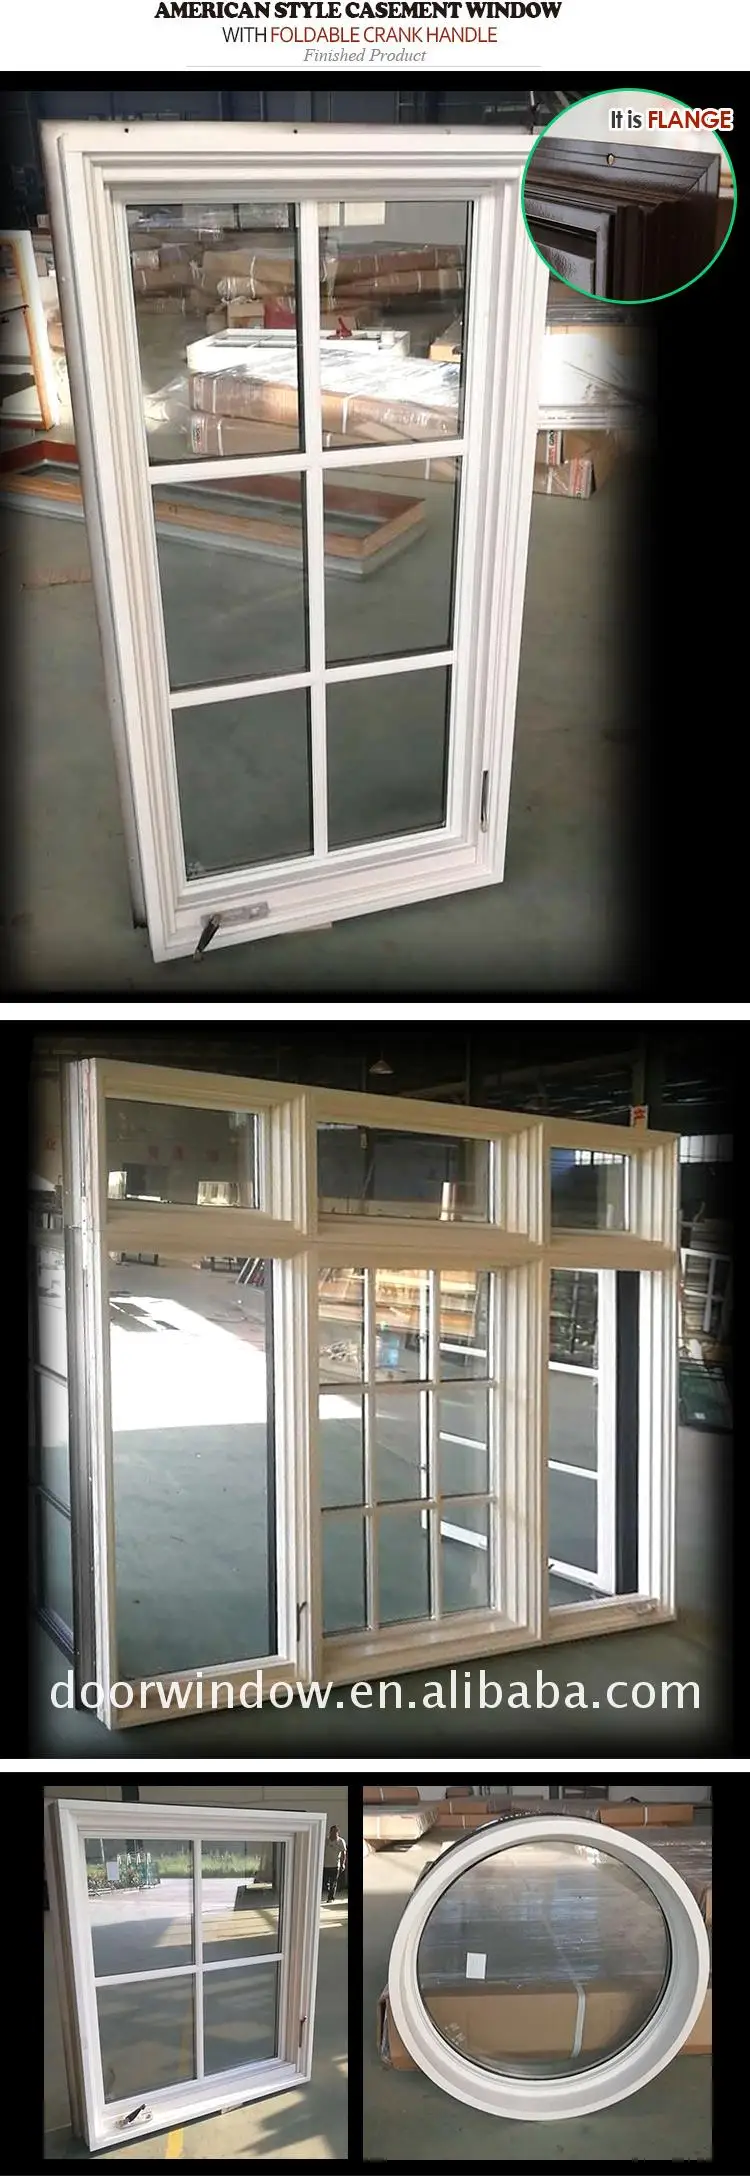 Customized wooden frame casement windows door and window design for